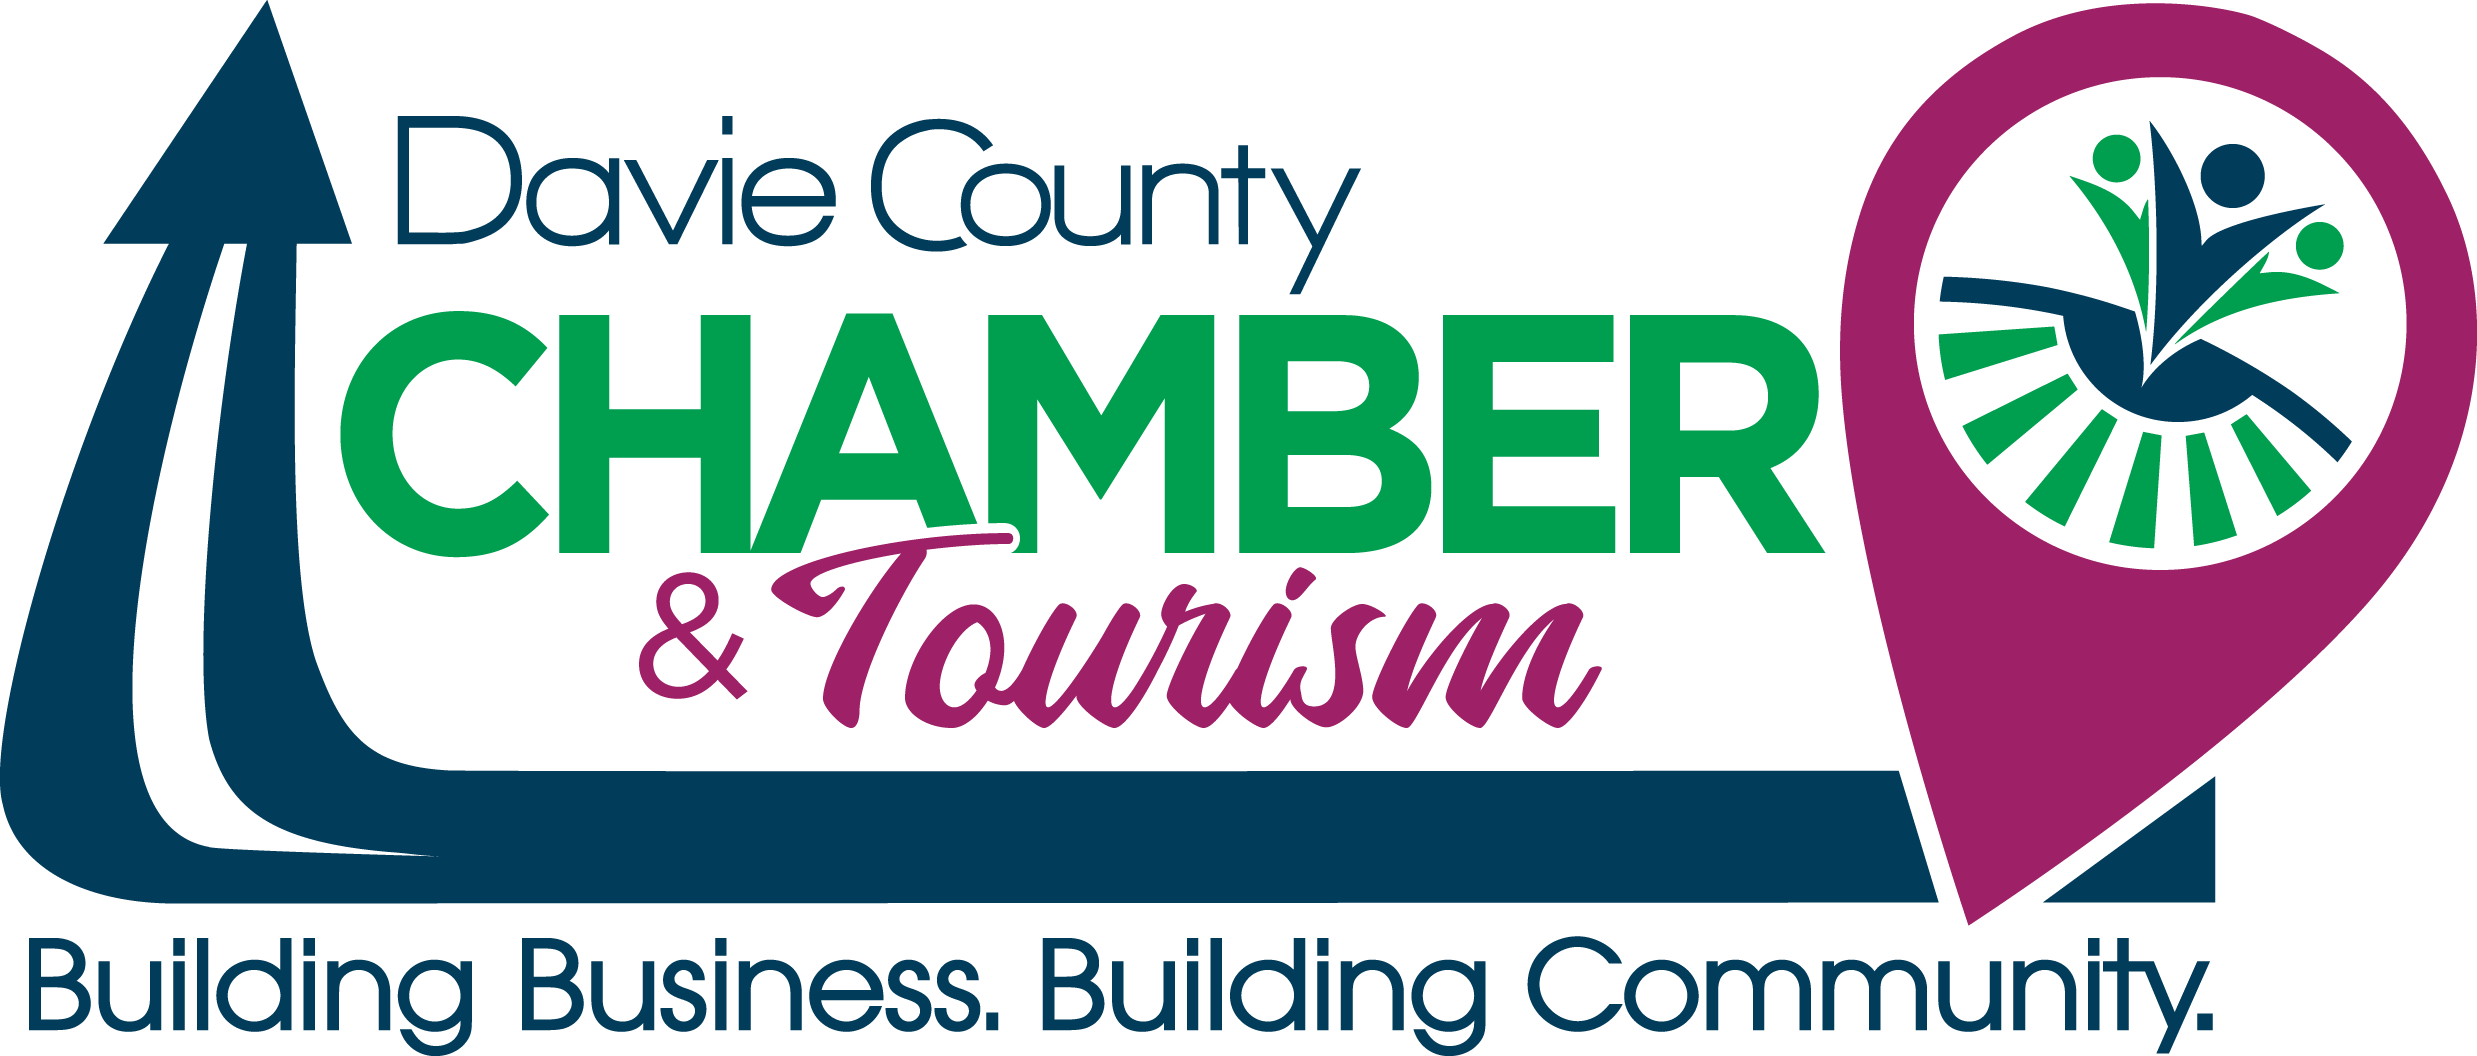 Davie County Chamber of Commerce & Visitor Center